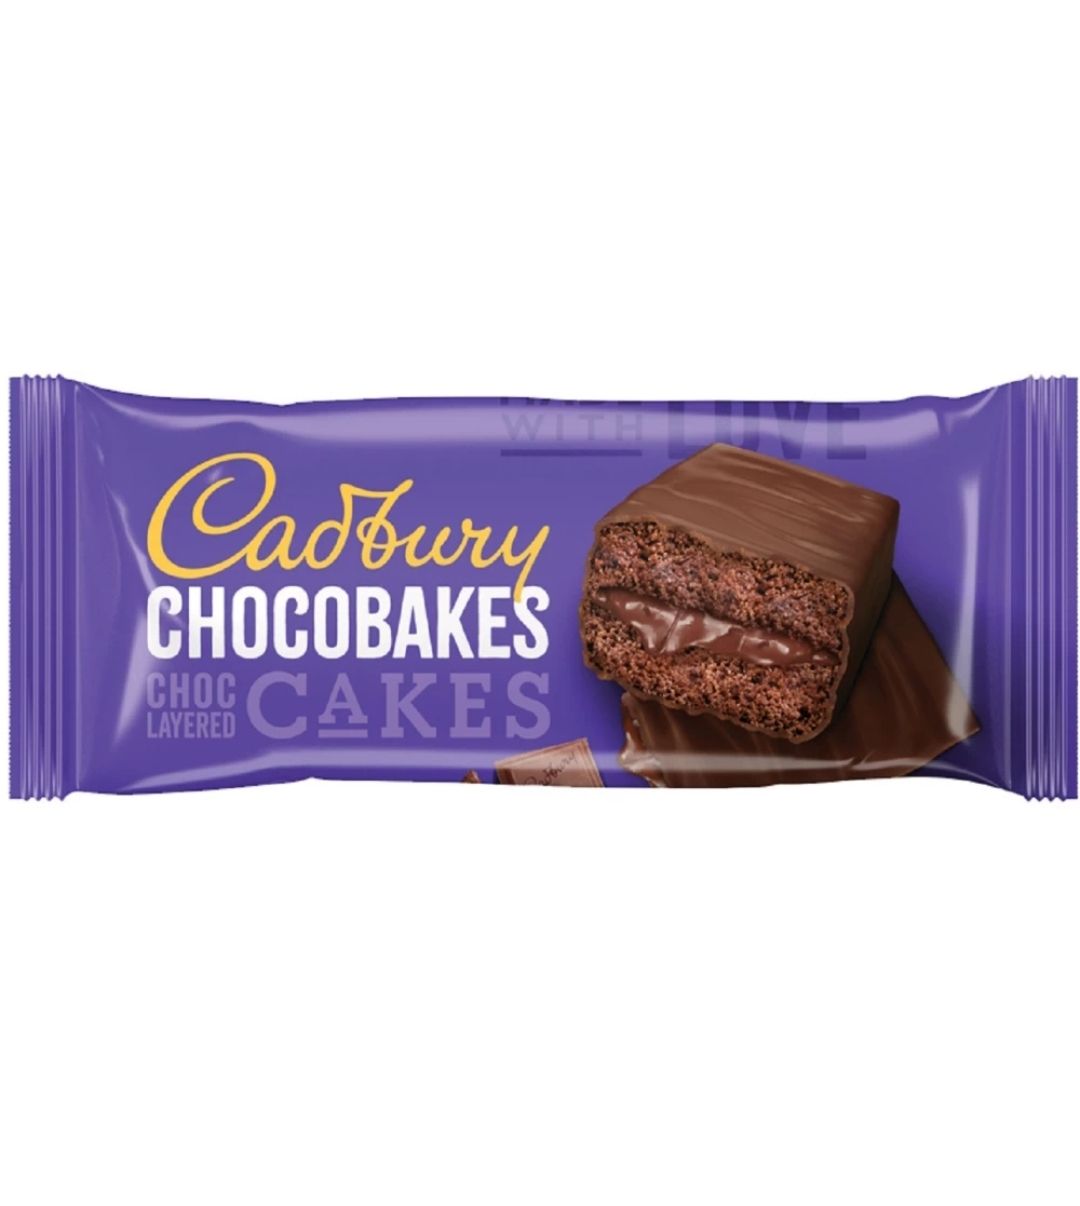 Cadbury chocobakes cakes review #cadbury #cadbury chocolate #chocolate #cake#chocolate  recipe#resipi - YouTube